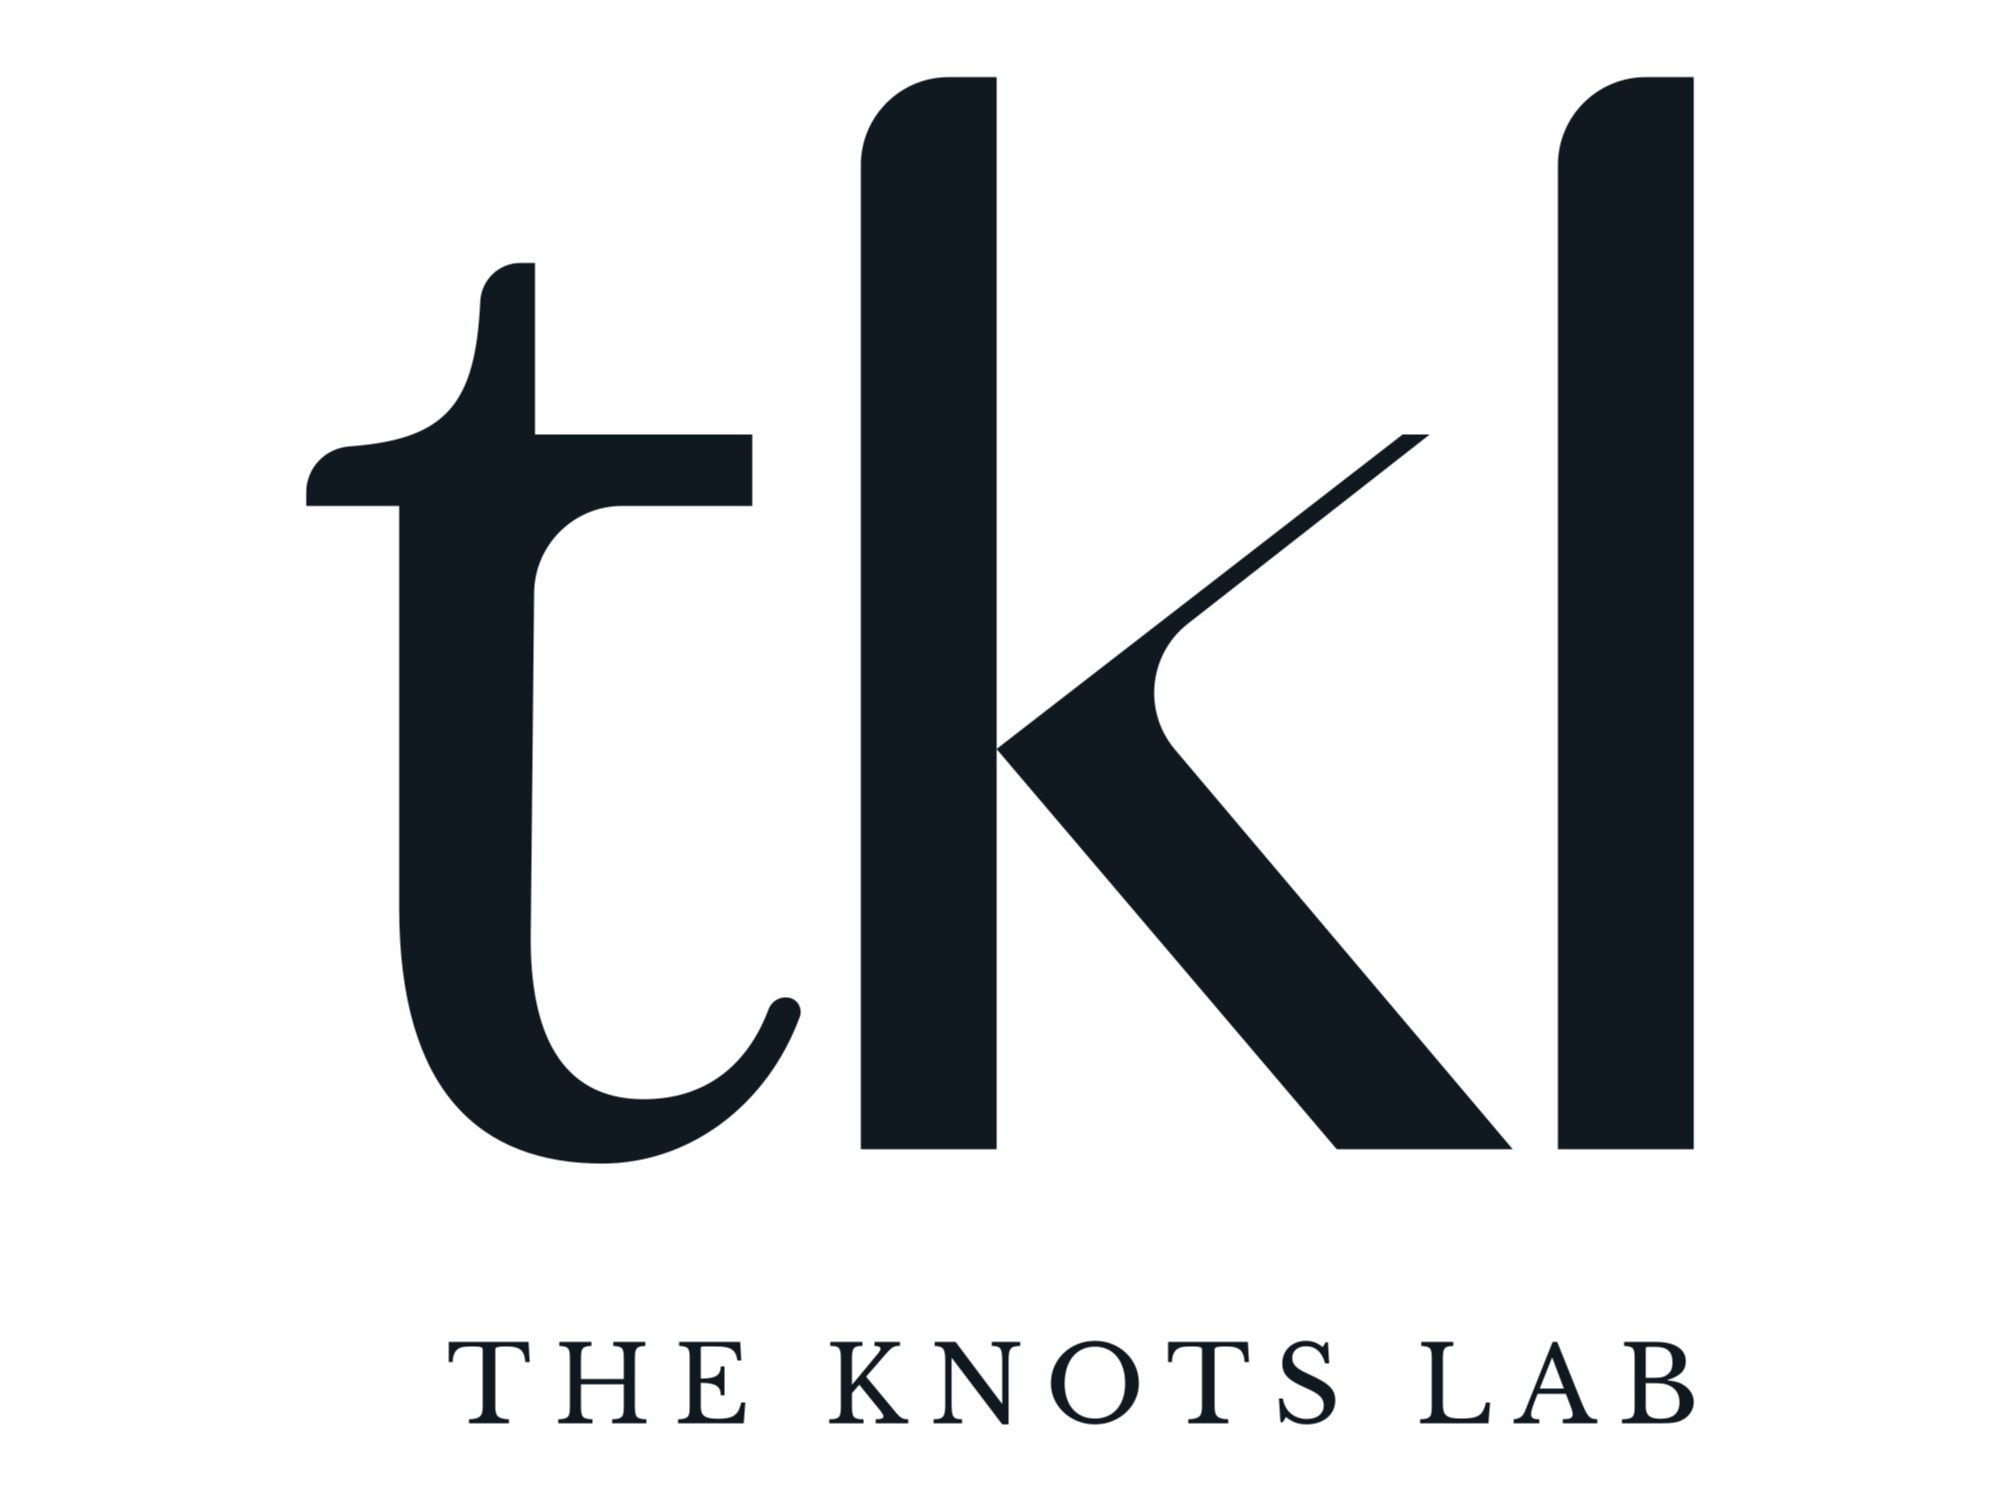 The knots lab